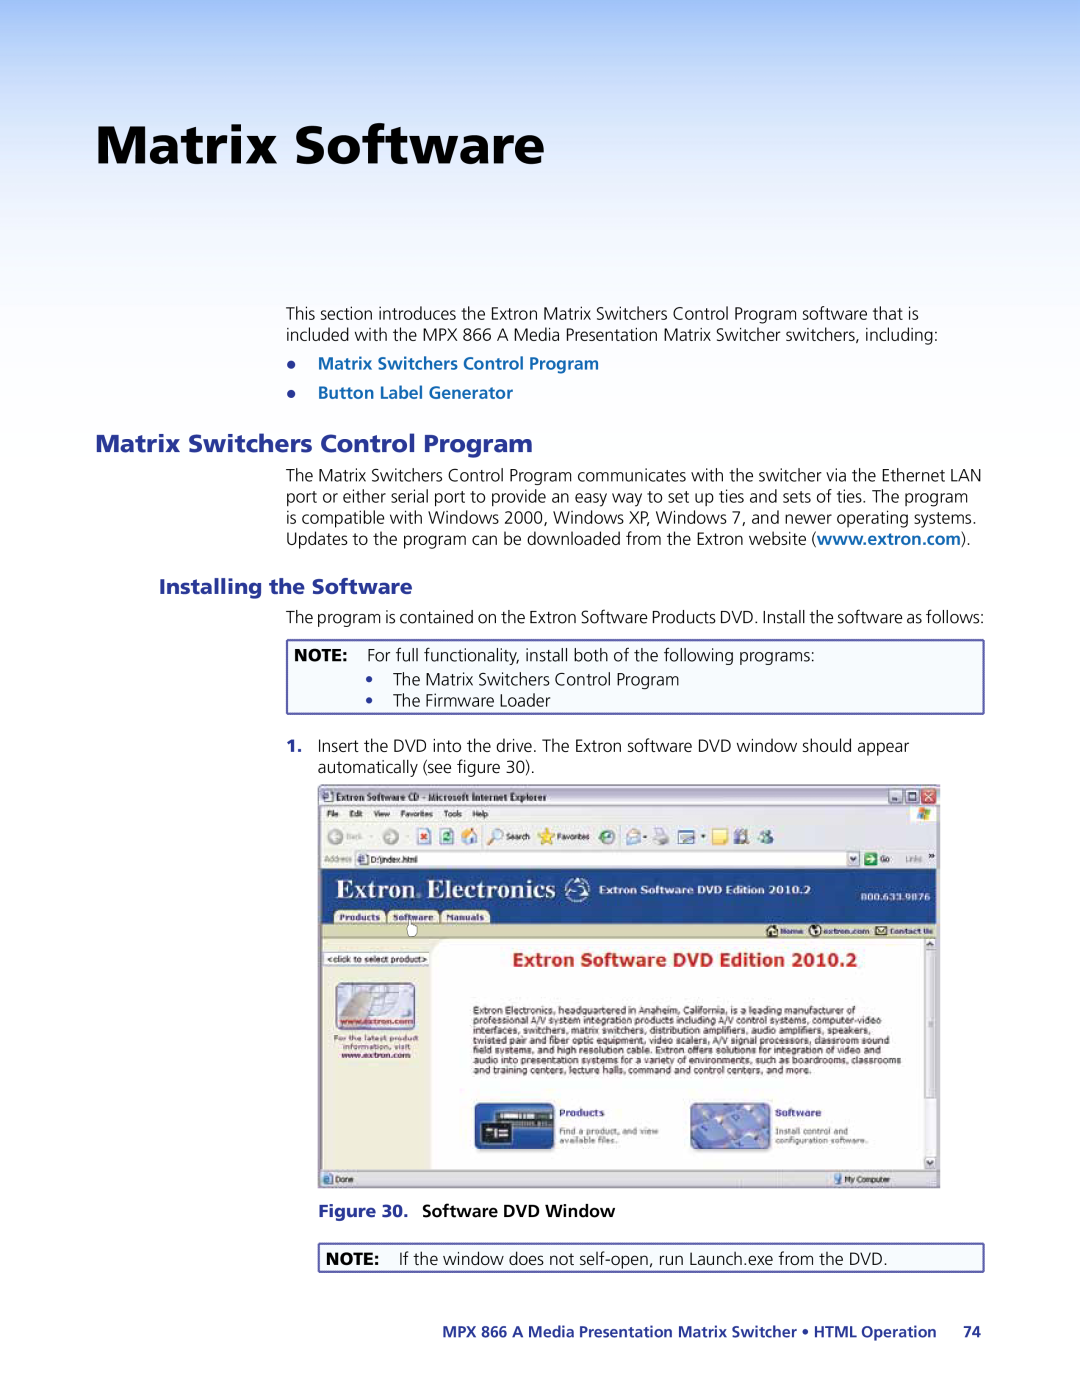 Extron electronic MPX 866 A manual Matrix Software, Matrix Switchers Control Program, Installing the Software 